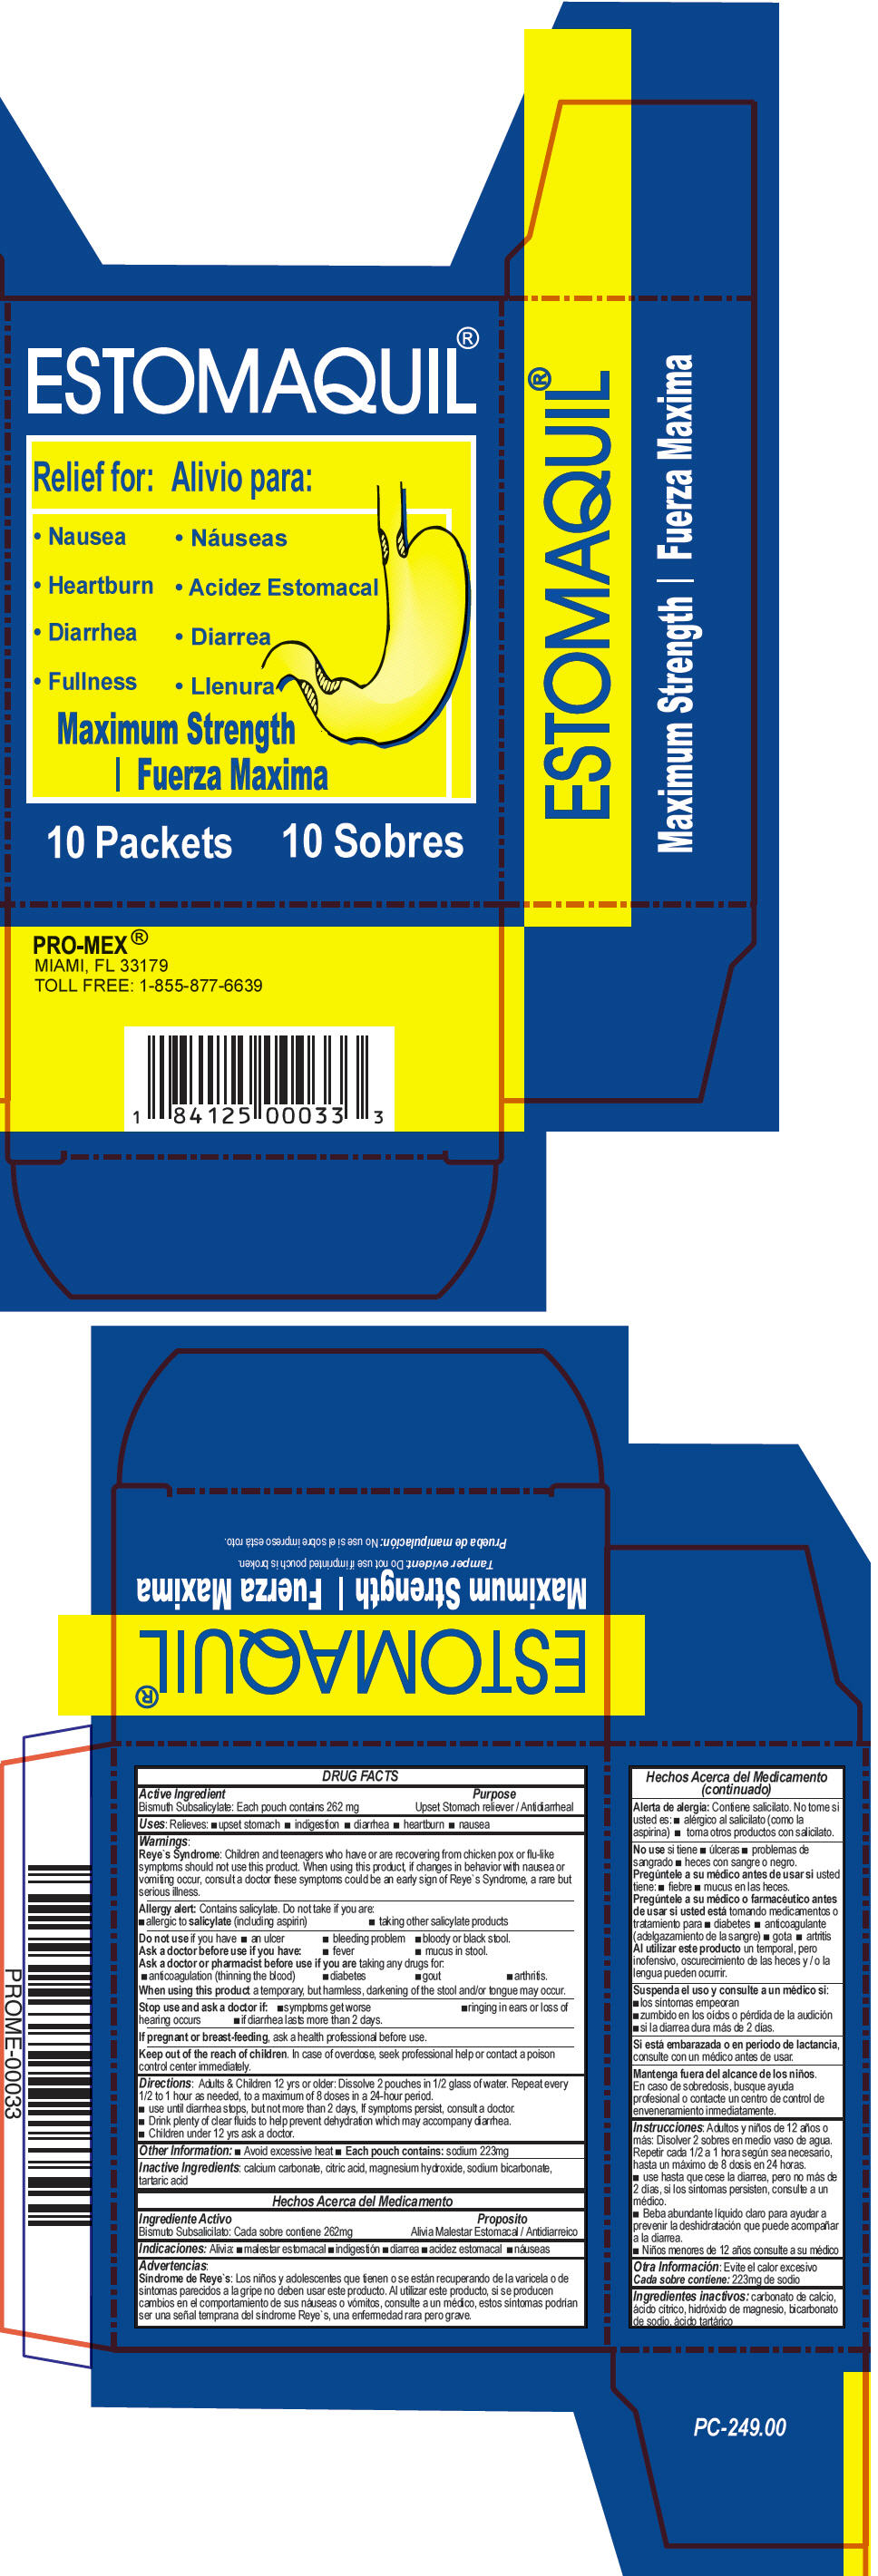 PRINCIPAL DISPLAY PANEL - 10 Packet Carton